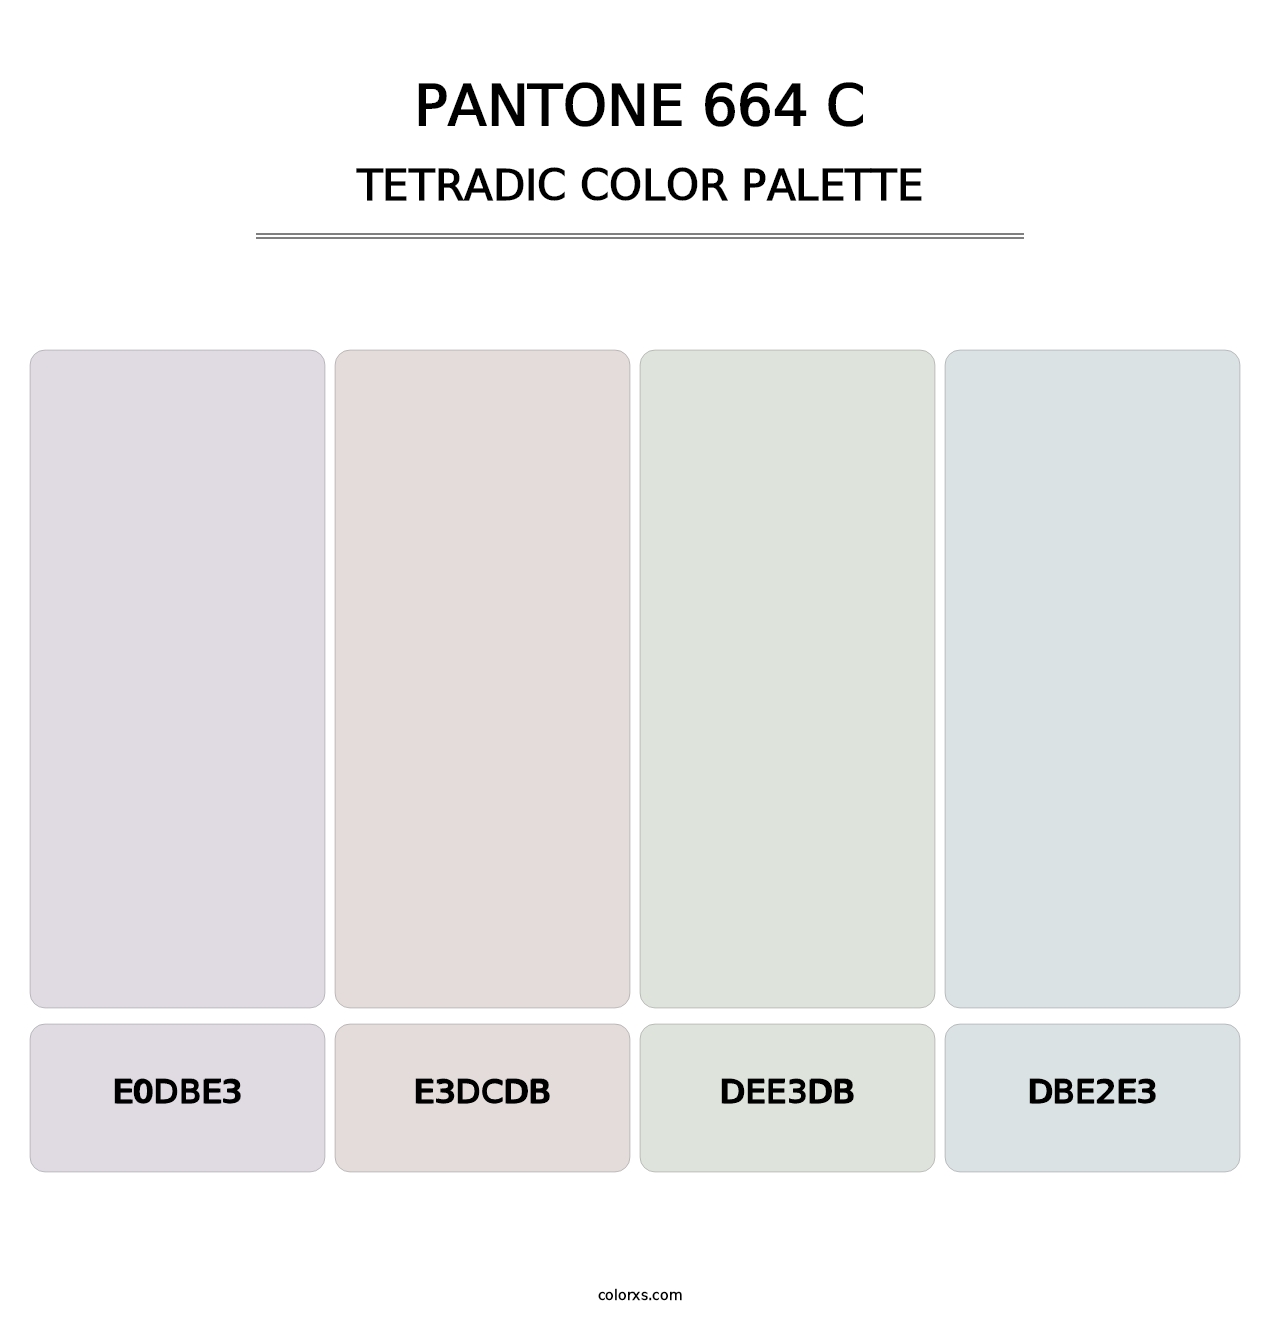 PANTONE 664 C - Tetradic Color Palette